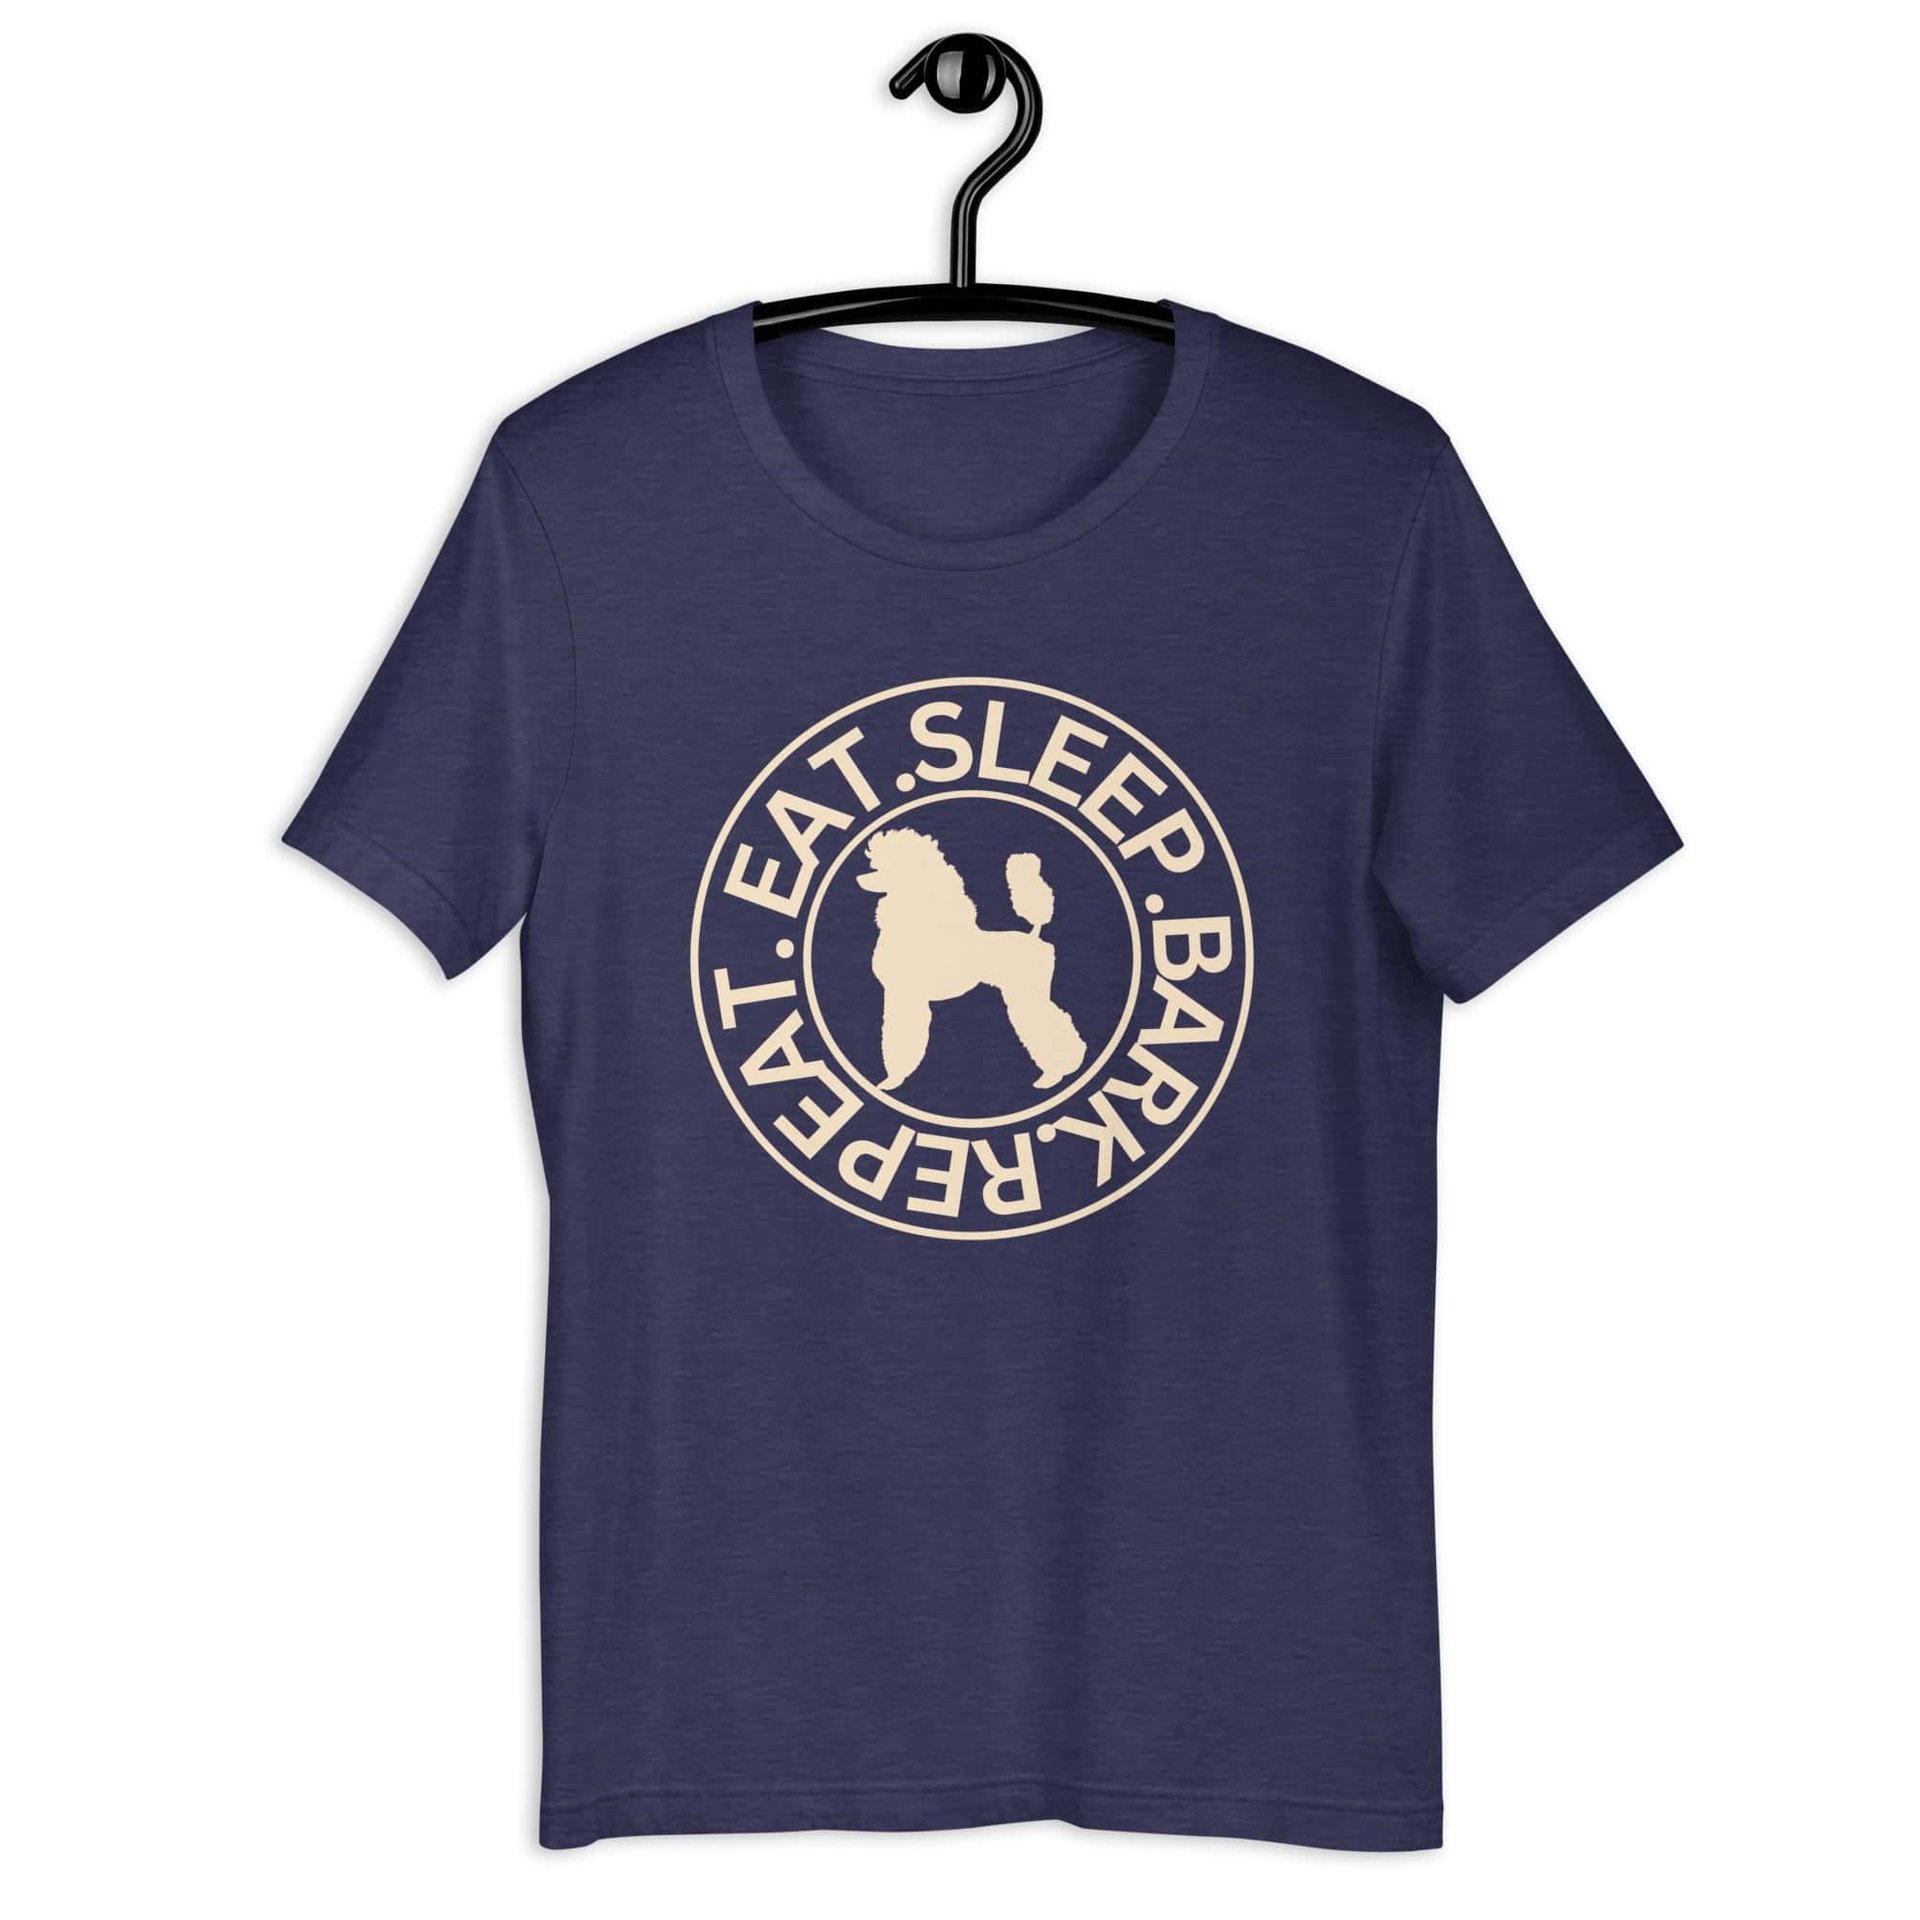 Eat Sleep Repeat Bark Miniature Poodle Unisex T-Shirt. Heather Midnight Navy